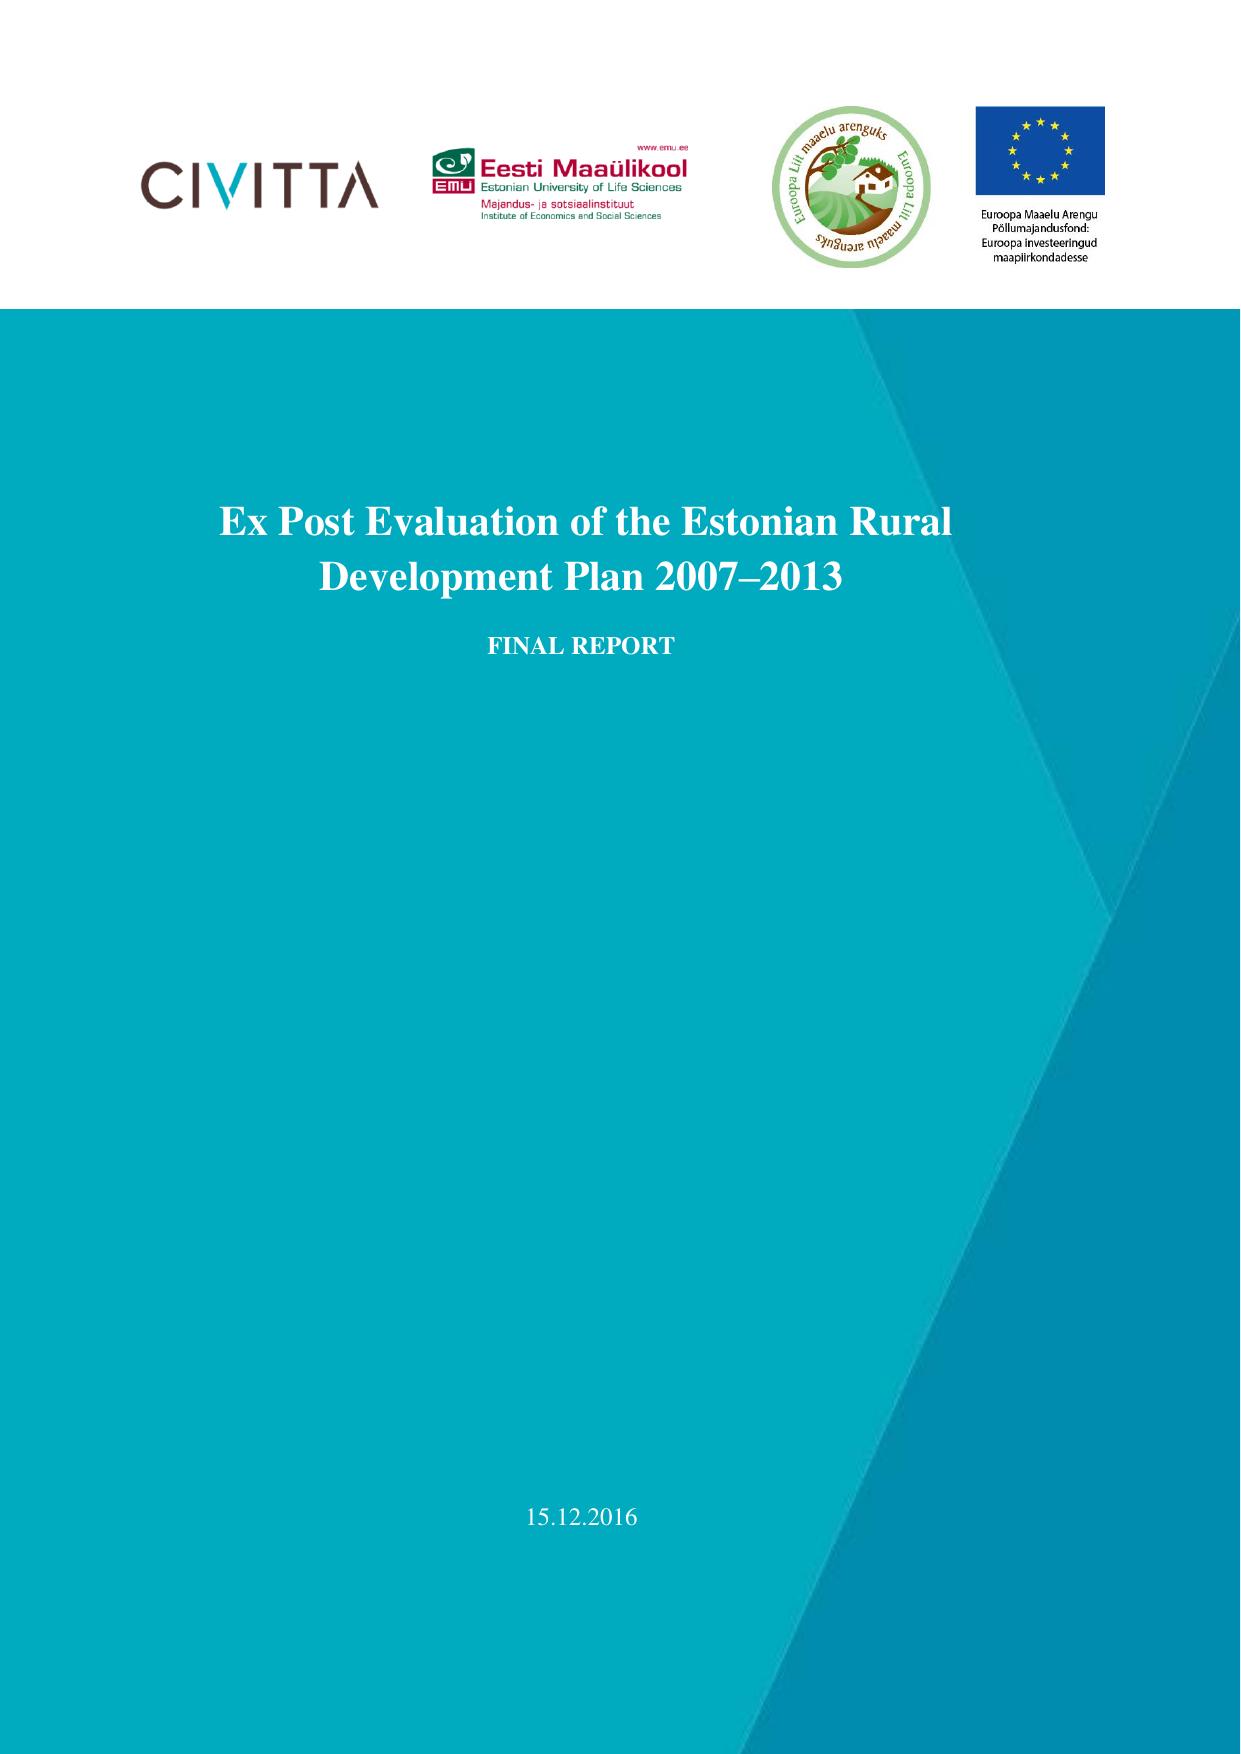 Ex Post Evaluation of the Estonian Rural Development Plan 2007-2013. Final Report